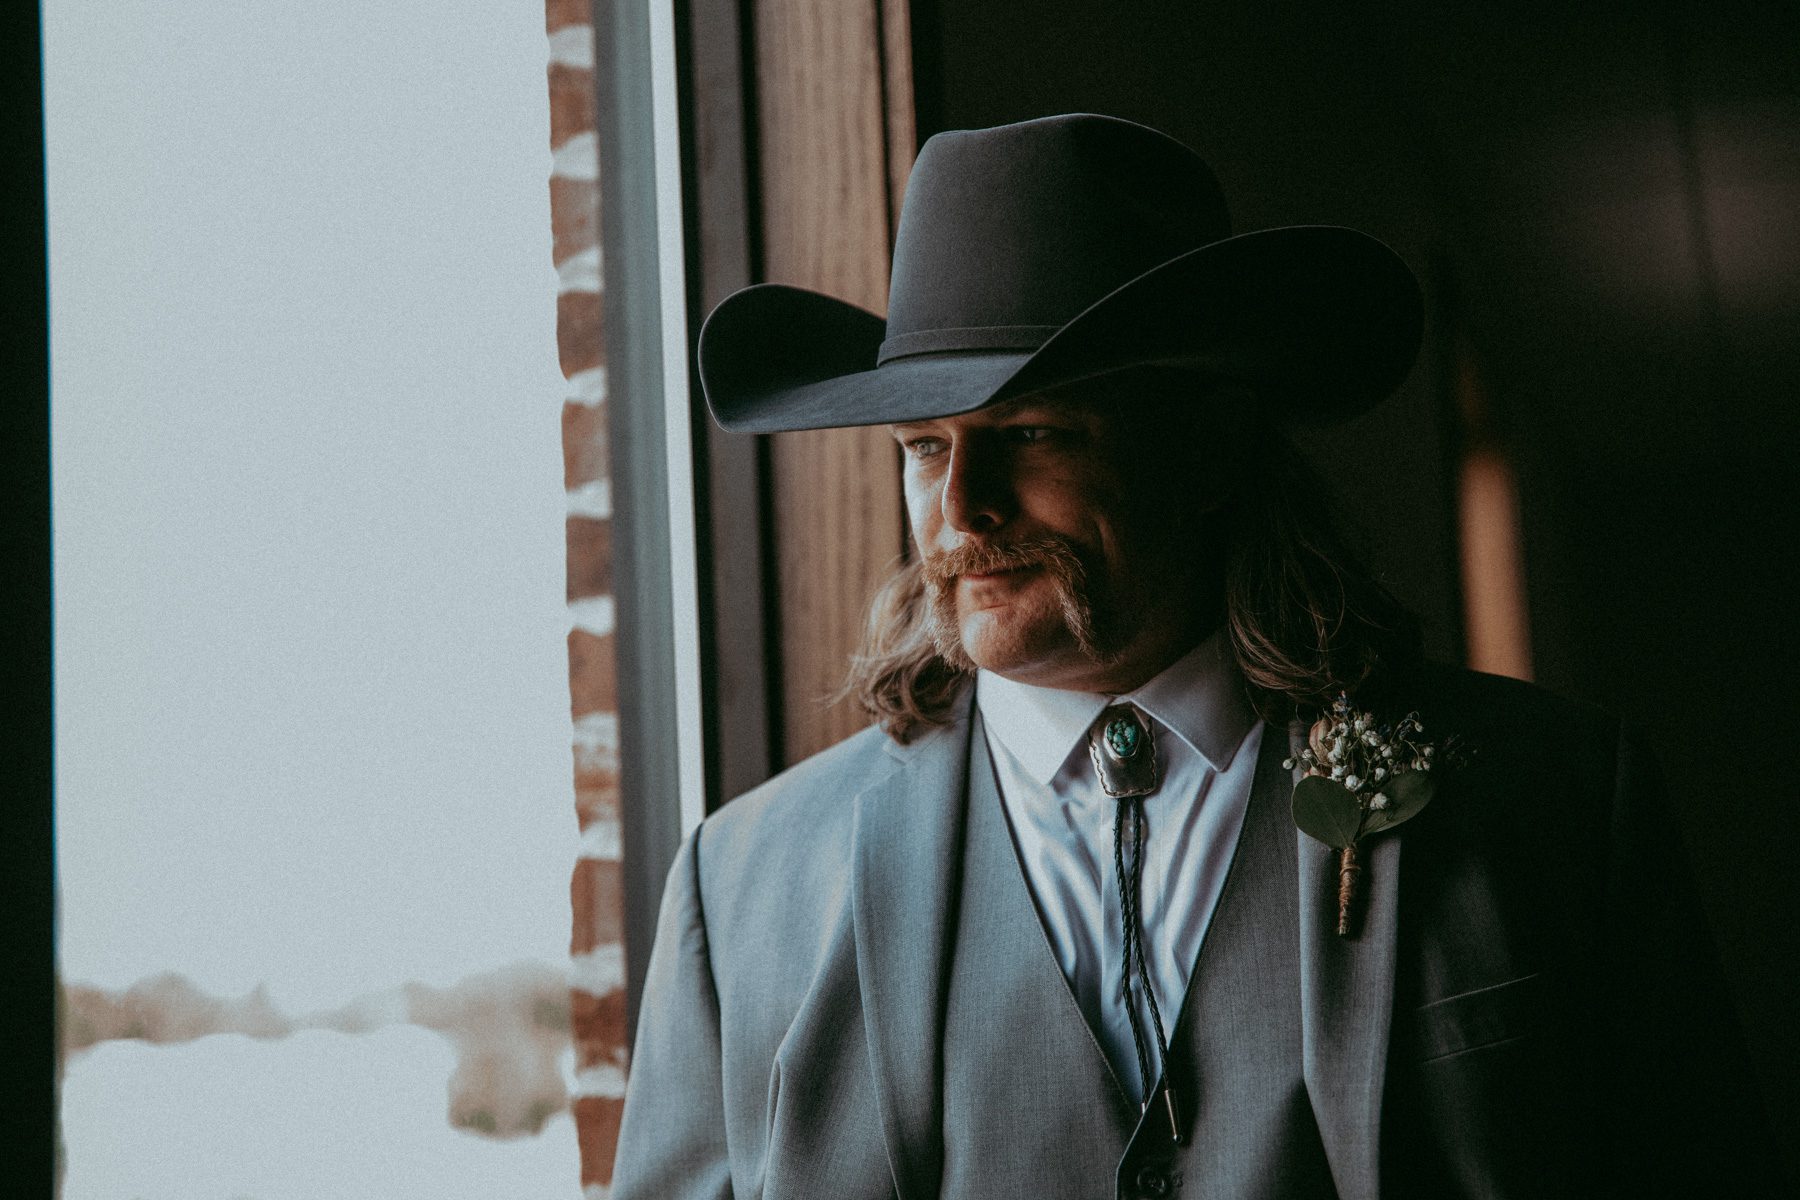 Nashvlle wedding photographer country groom window portrait 